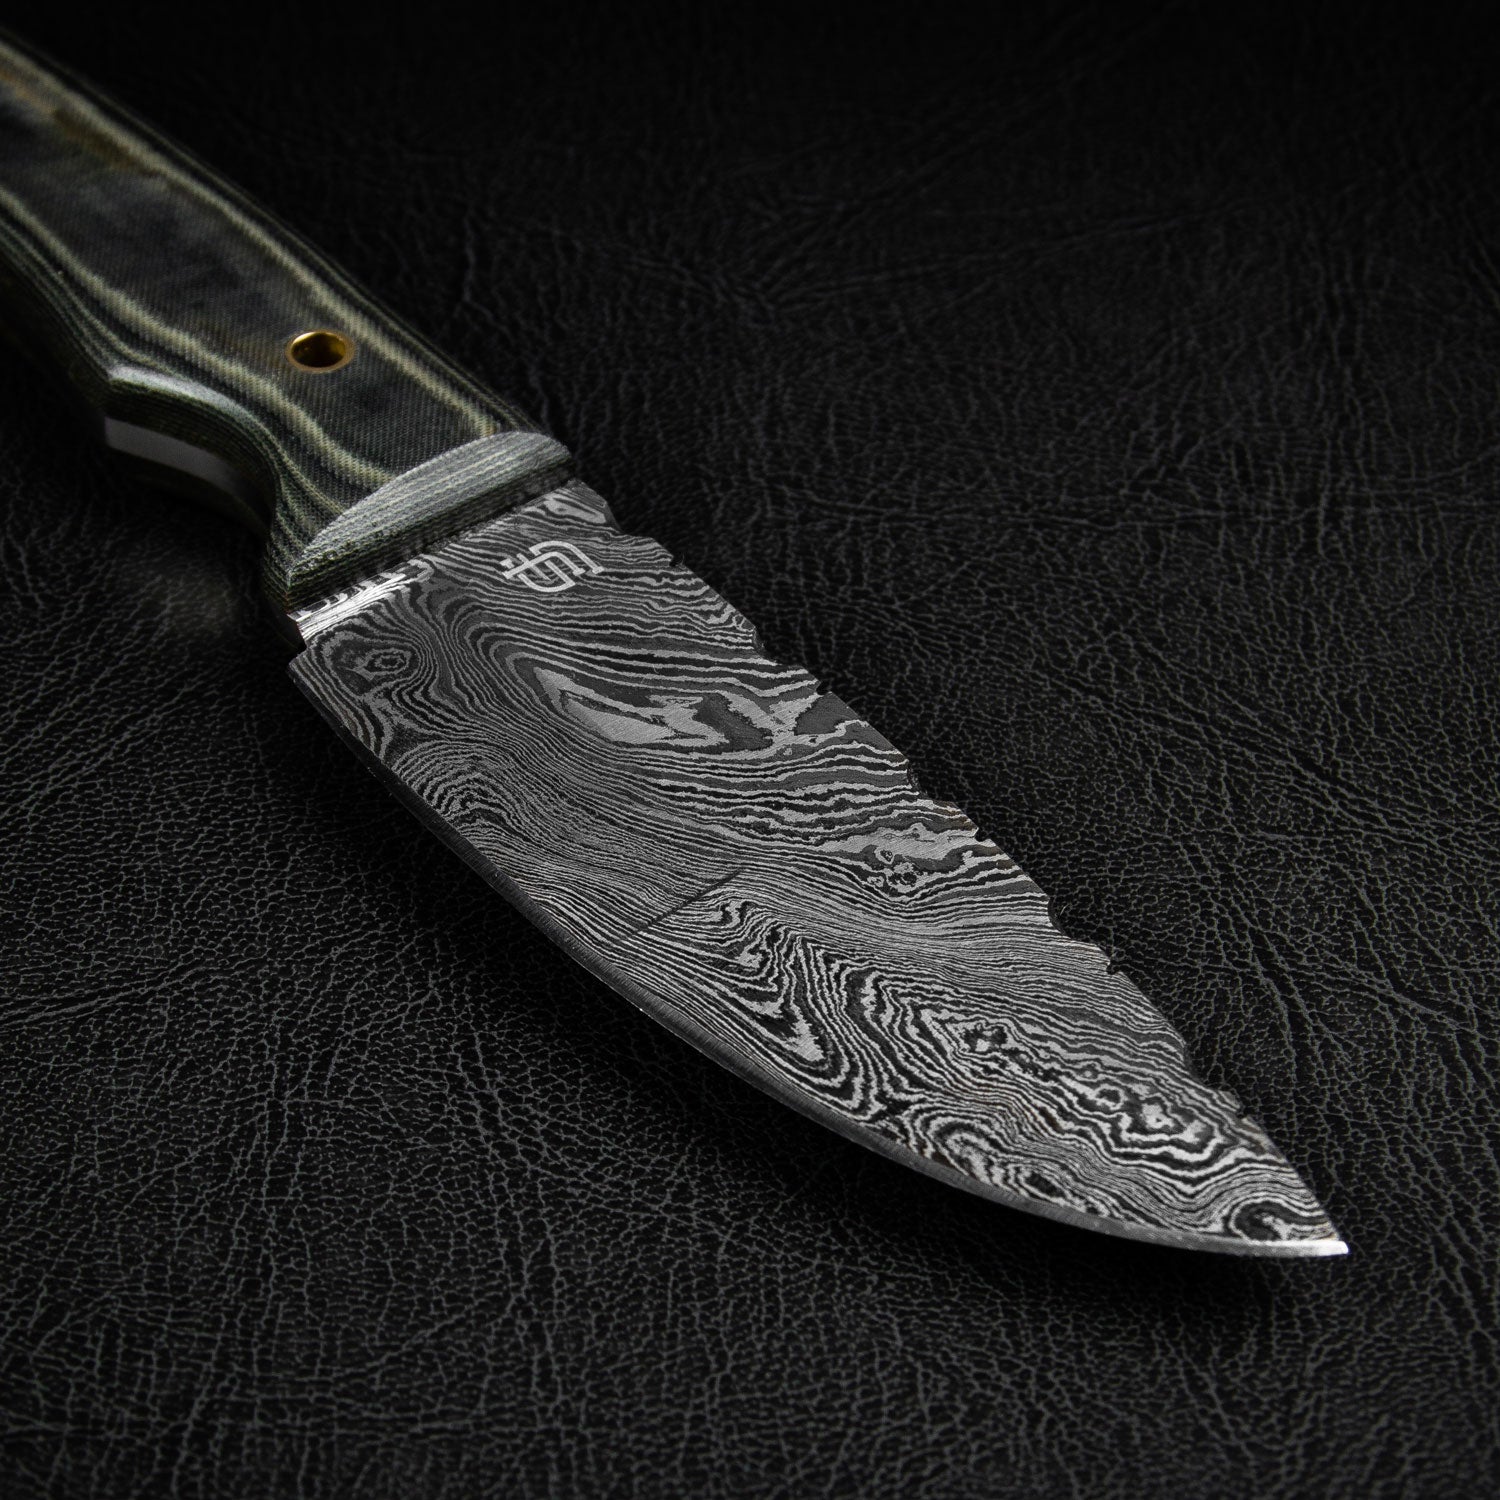 Handmade Damascus Steel Steak Knives Set – The Bowie Knife